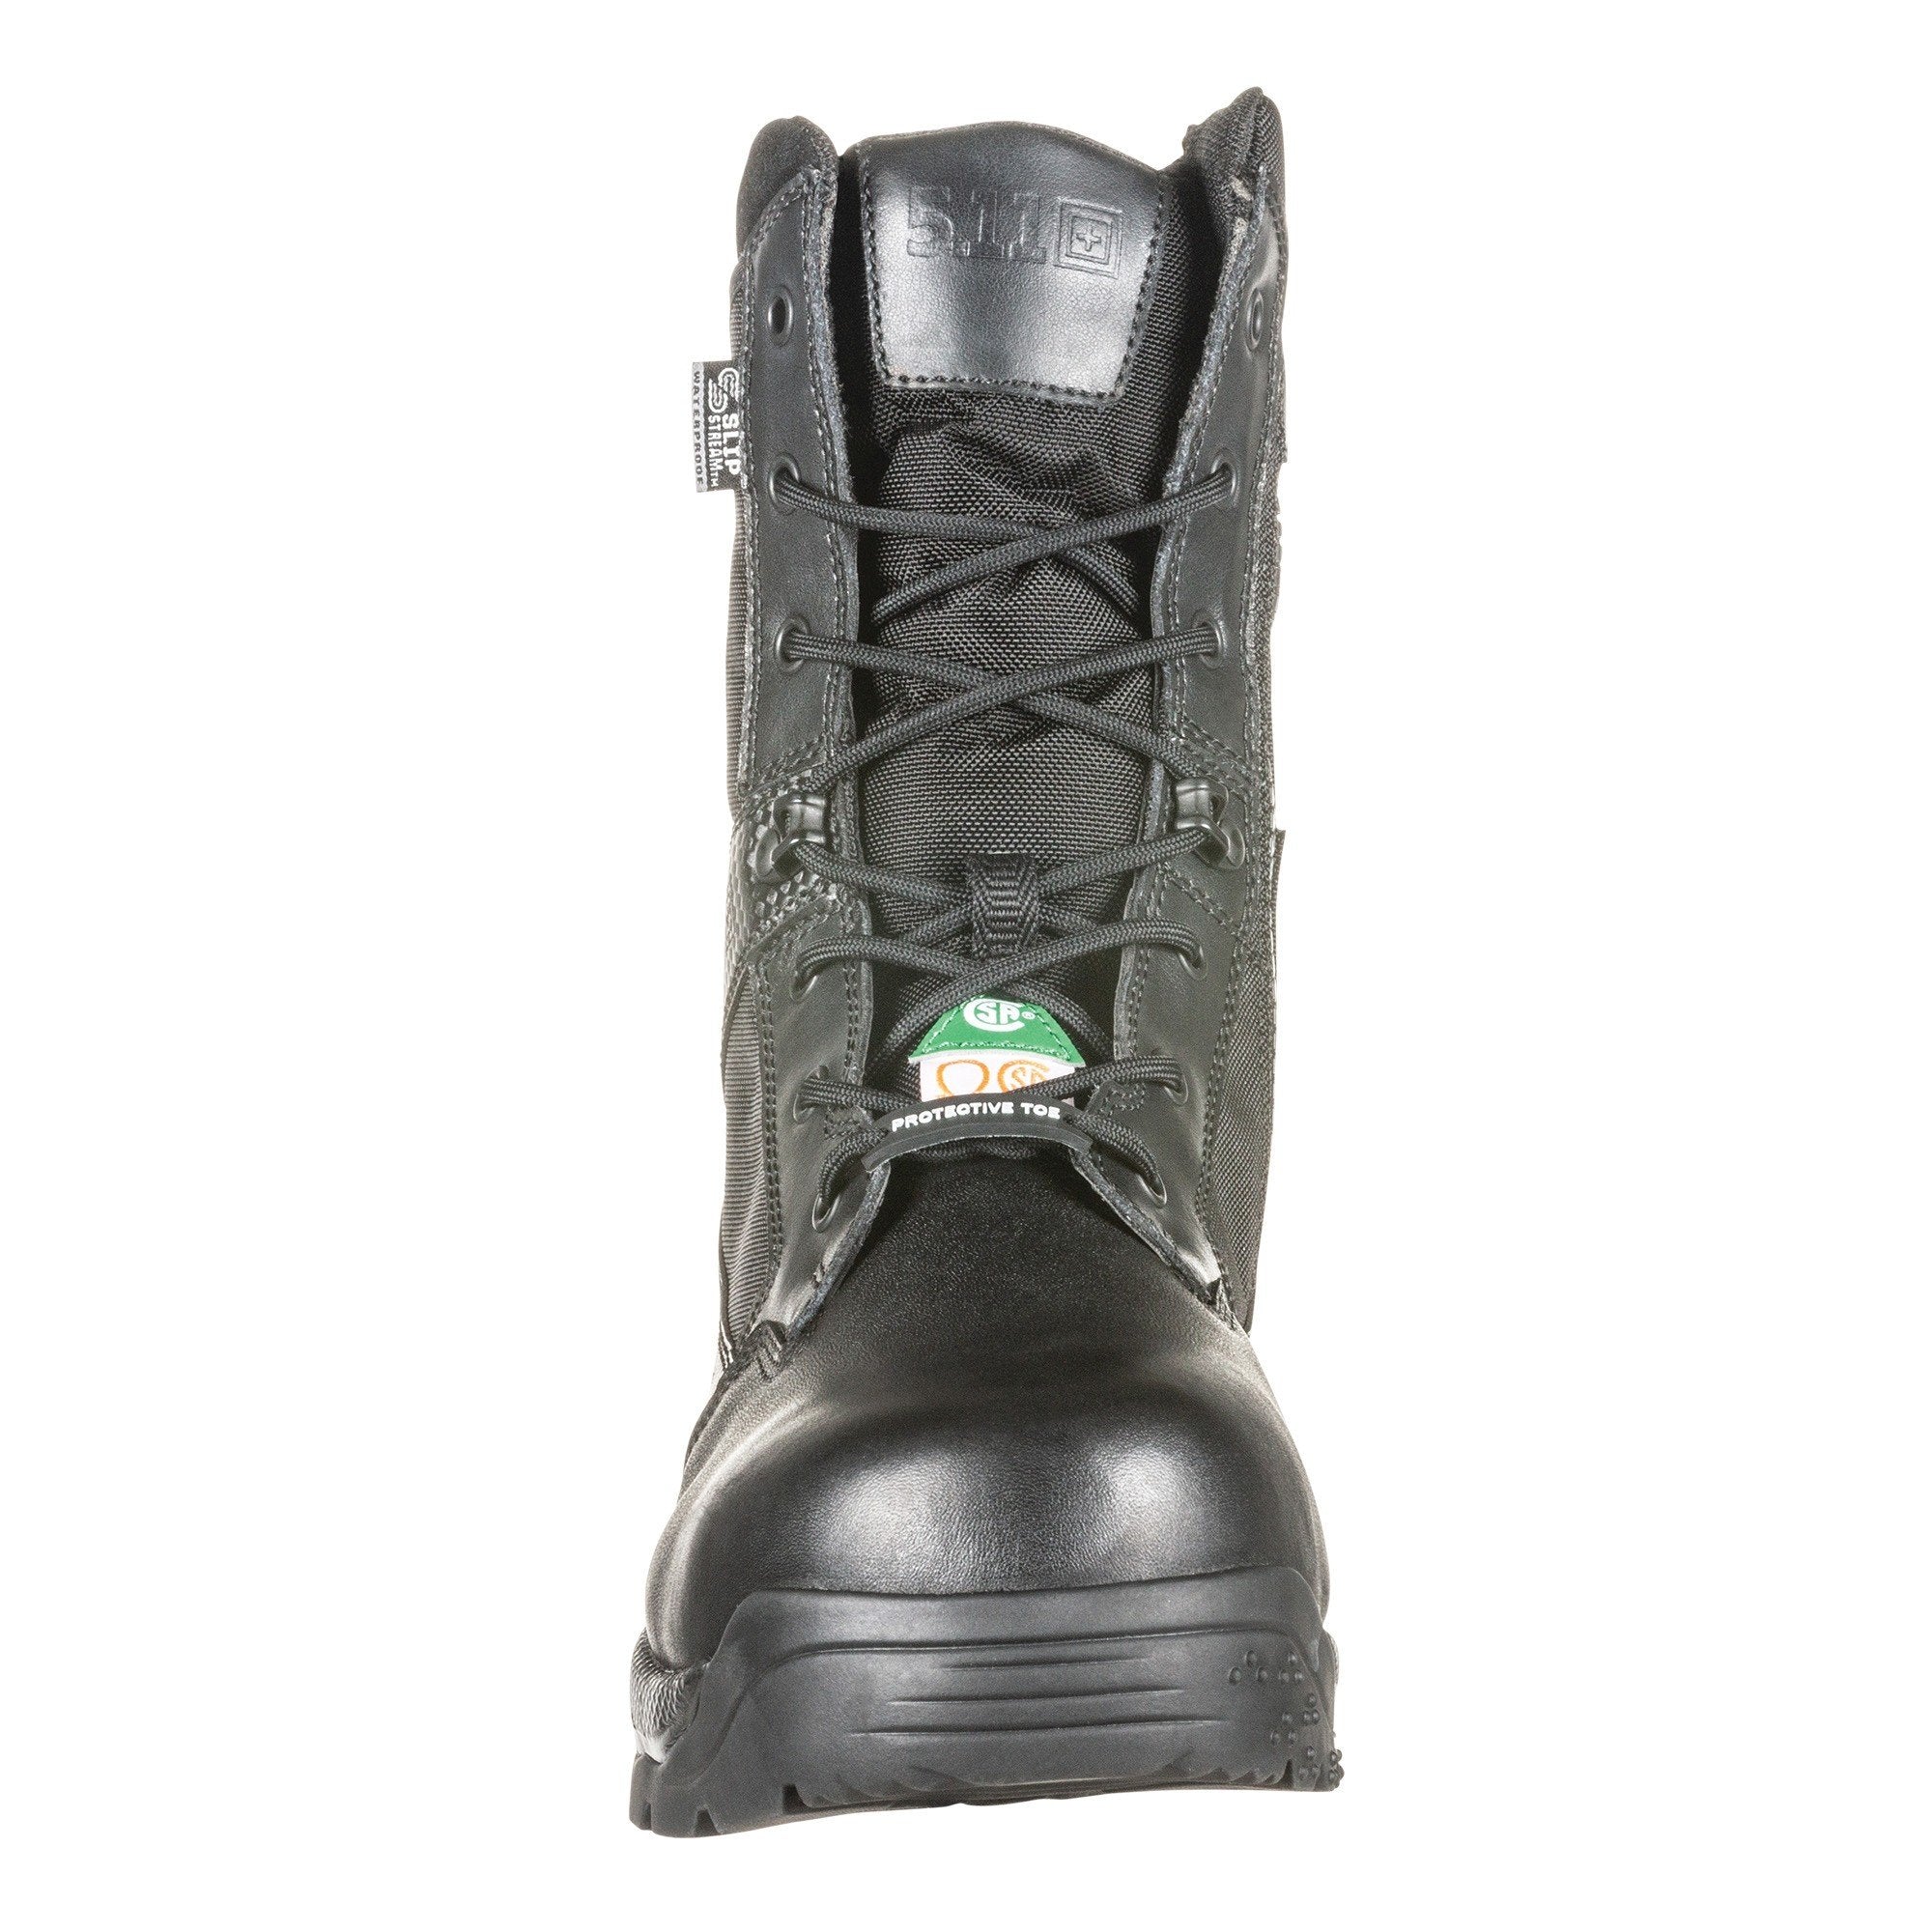 5.11 Tactical ATAC 8 Inches Shield 2.0 Side Zip Boots Black Footwear 5.11 Tactical Tactical Gear Supplier Tactical Distributors Australia